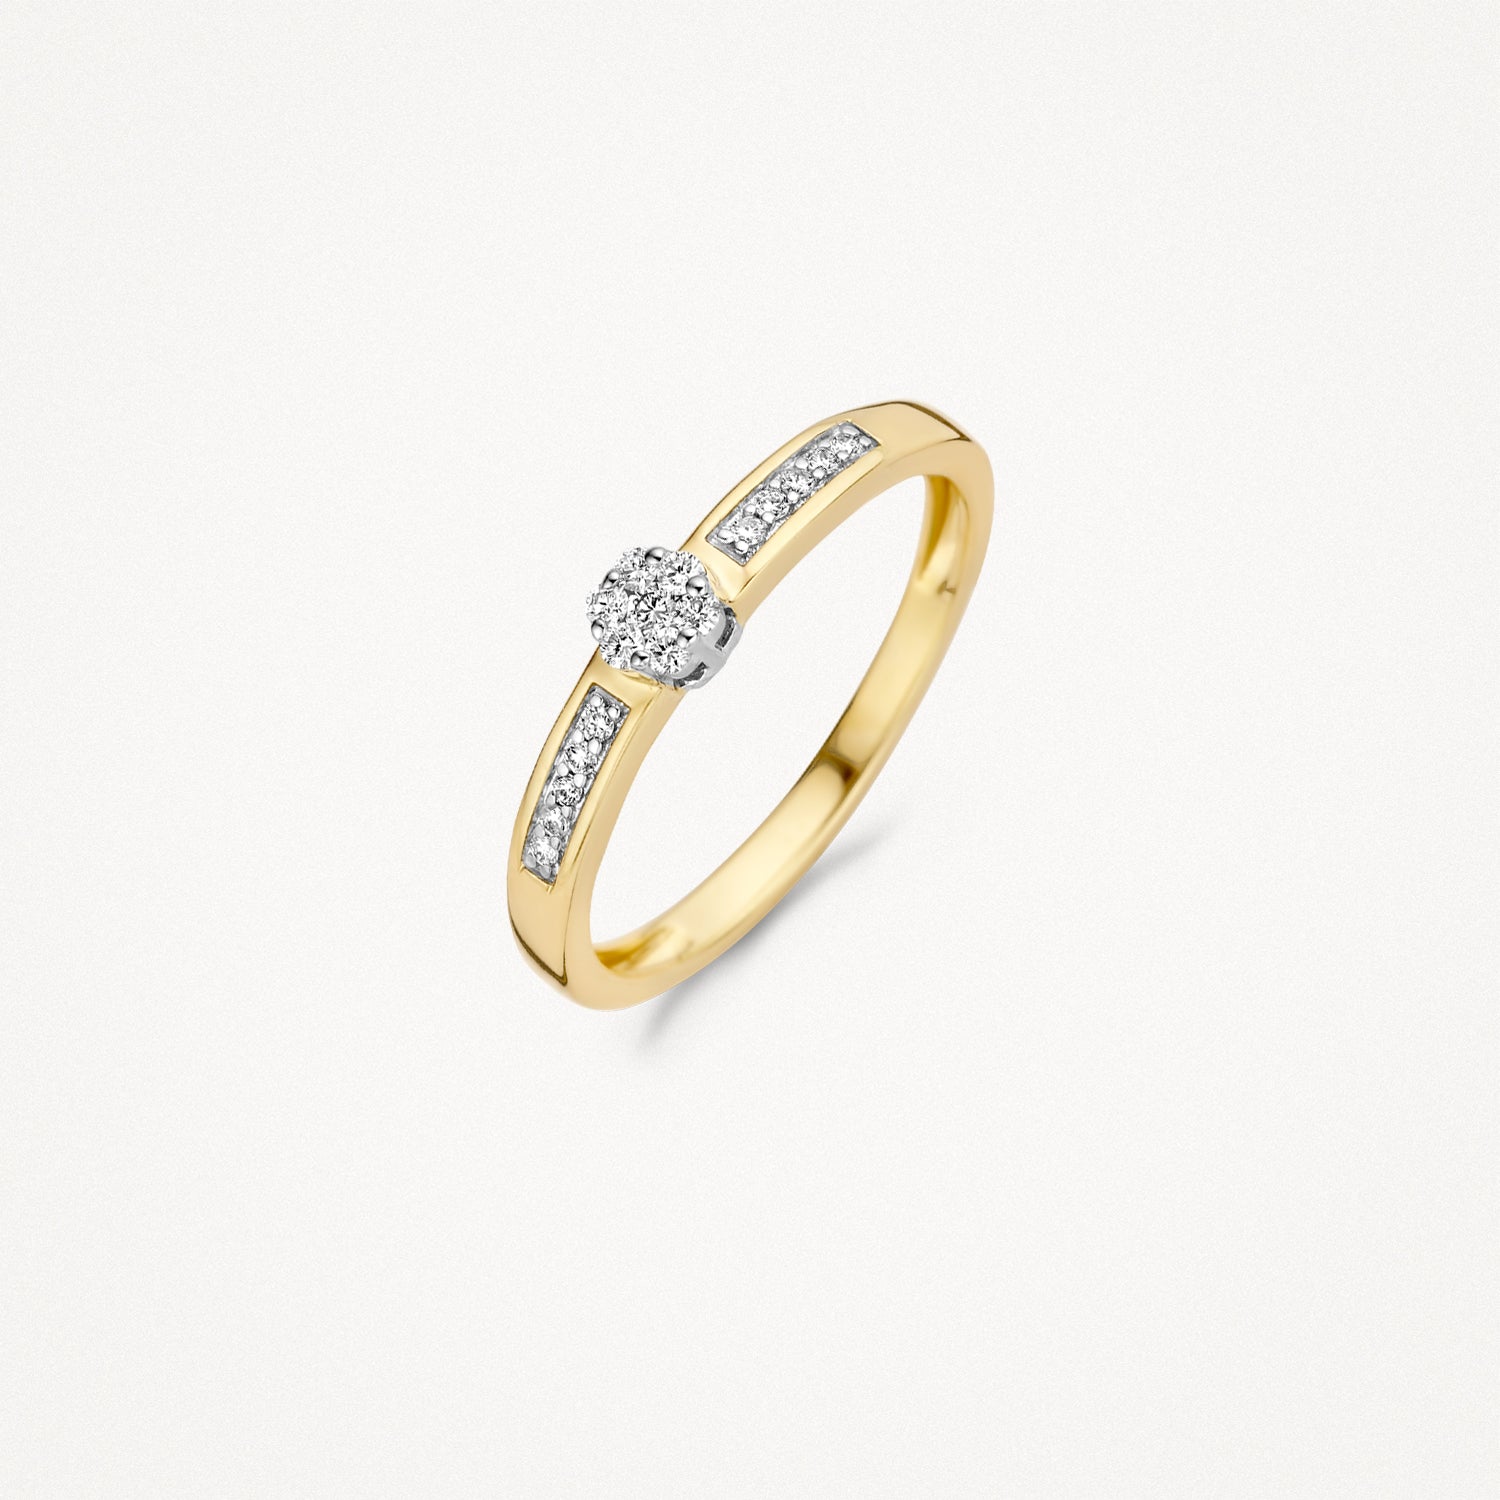 Ring 1623WDI - 14k White gold with diamond